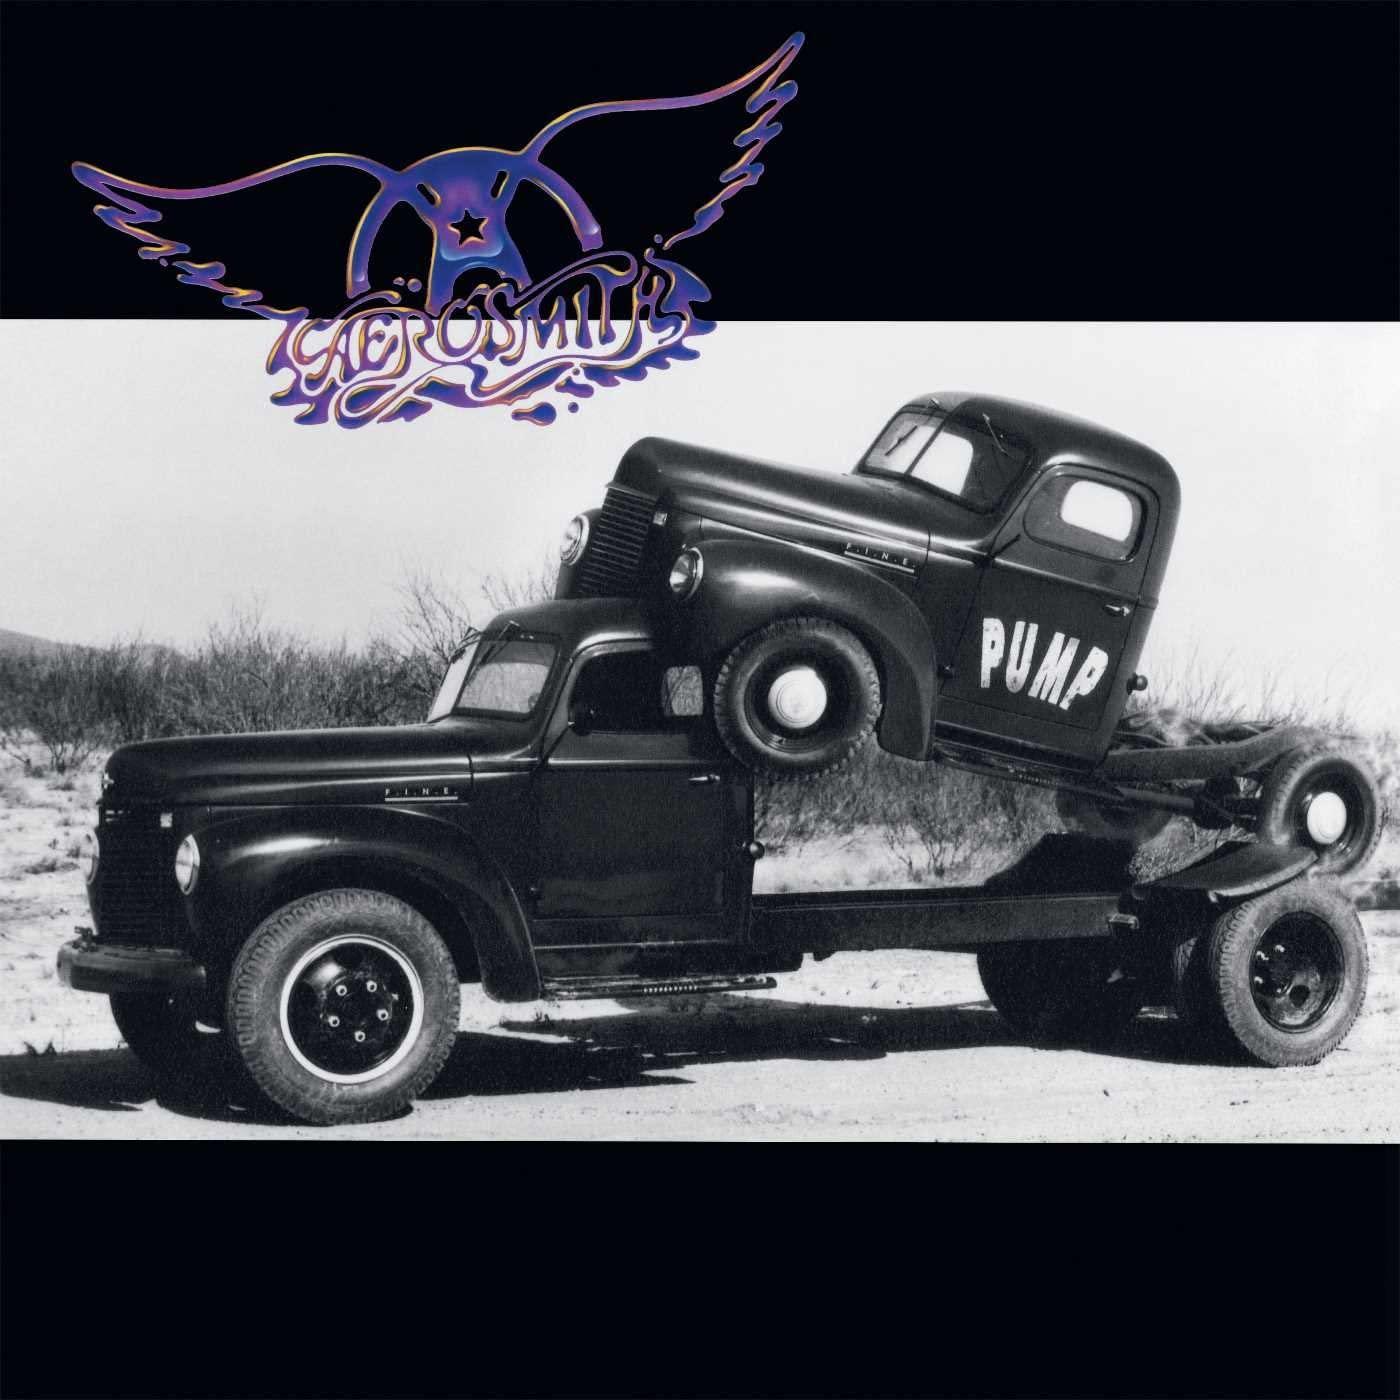 Aerosmith - Pump (1989) LP